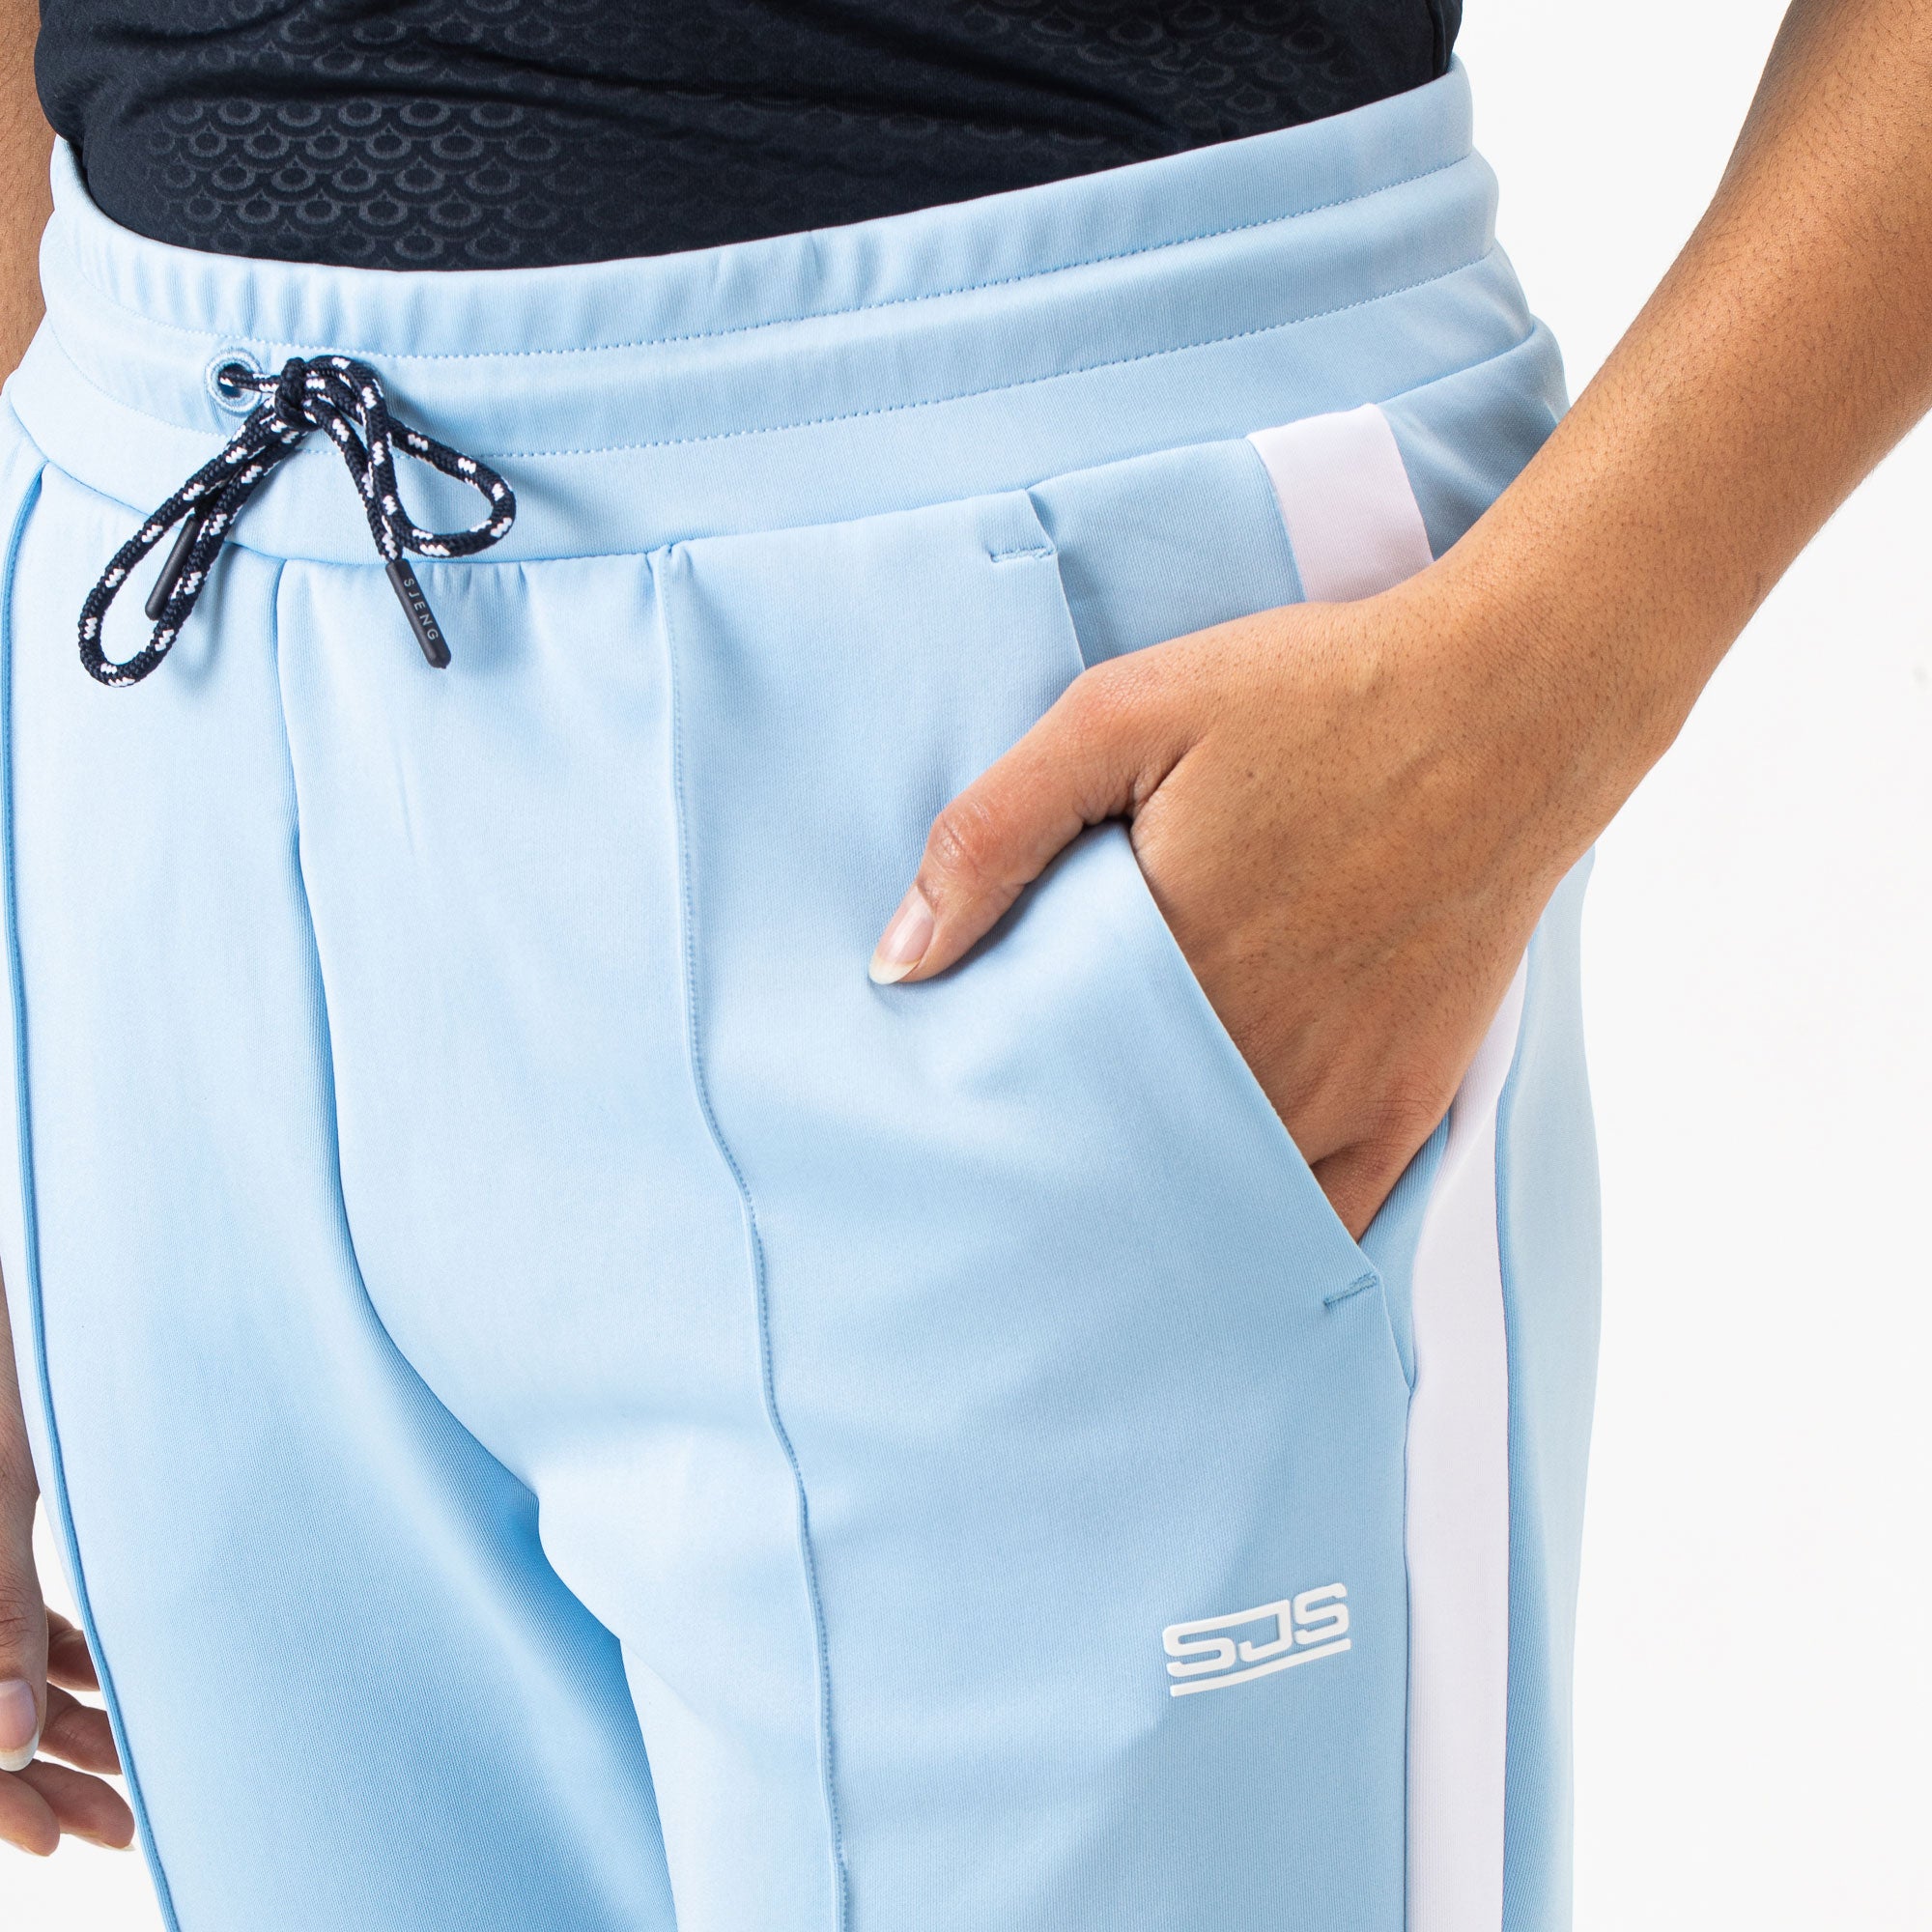 Sjeng Sports Kensi Women's Tennis Pants - Blue (3)